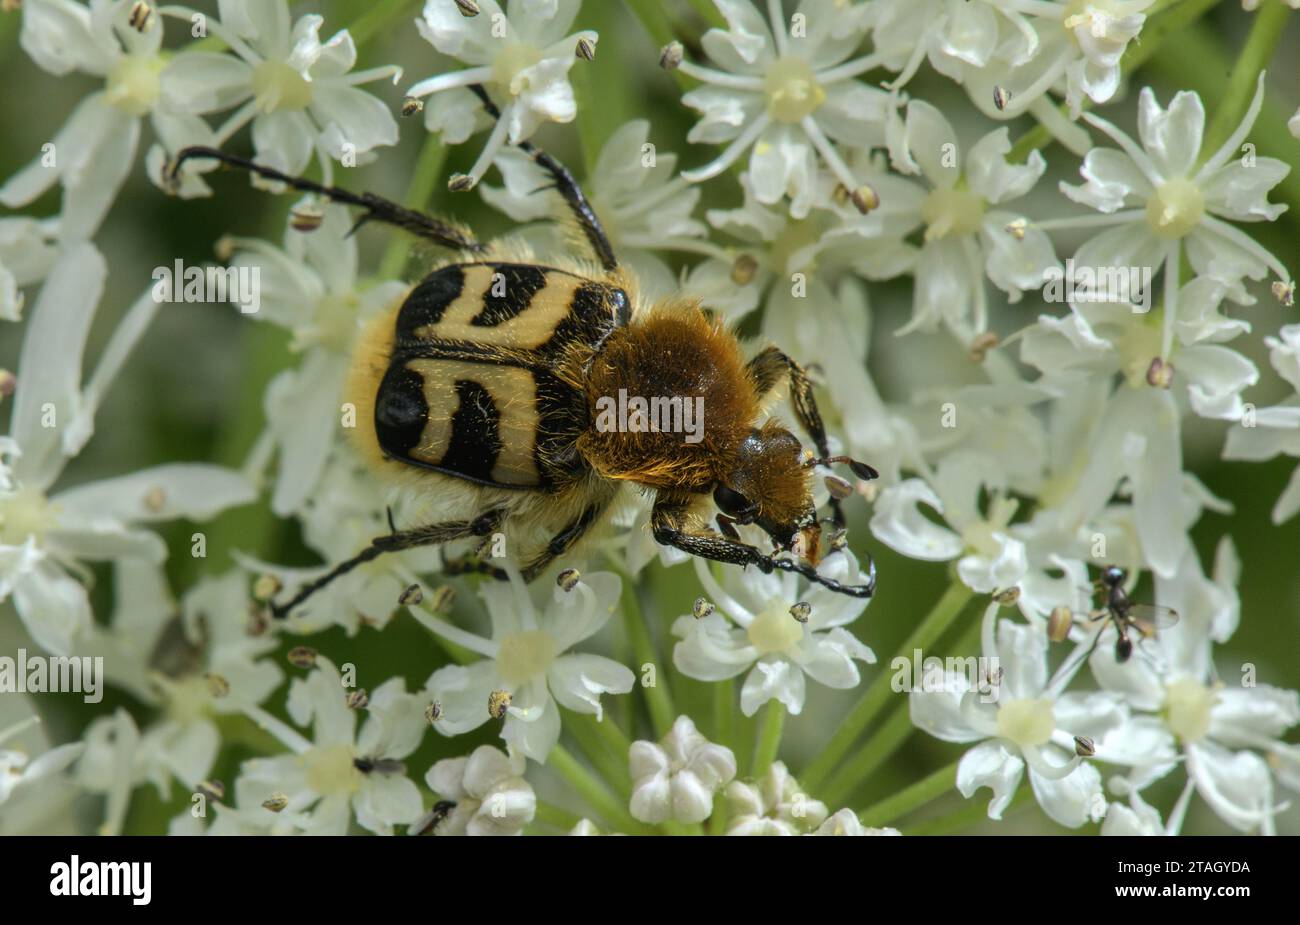 Eurasian bee beetle, Trichius fasciatus, feeding on Hogweed flowers. Stock Photo